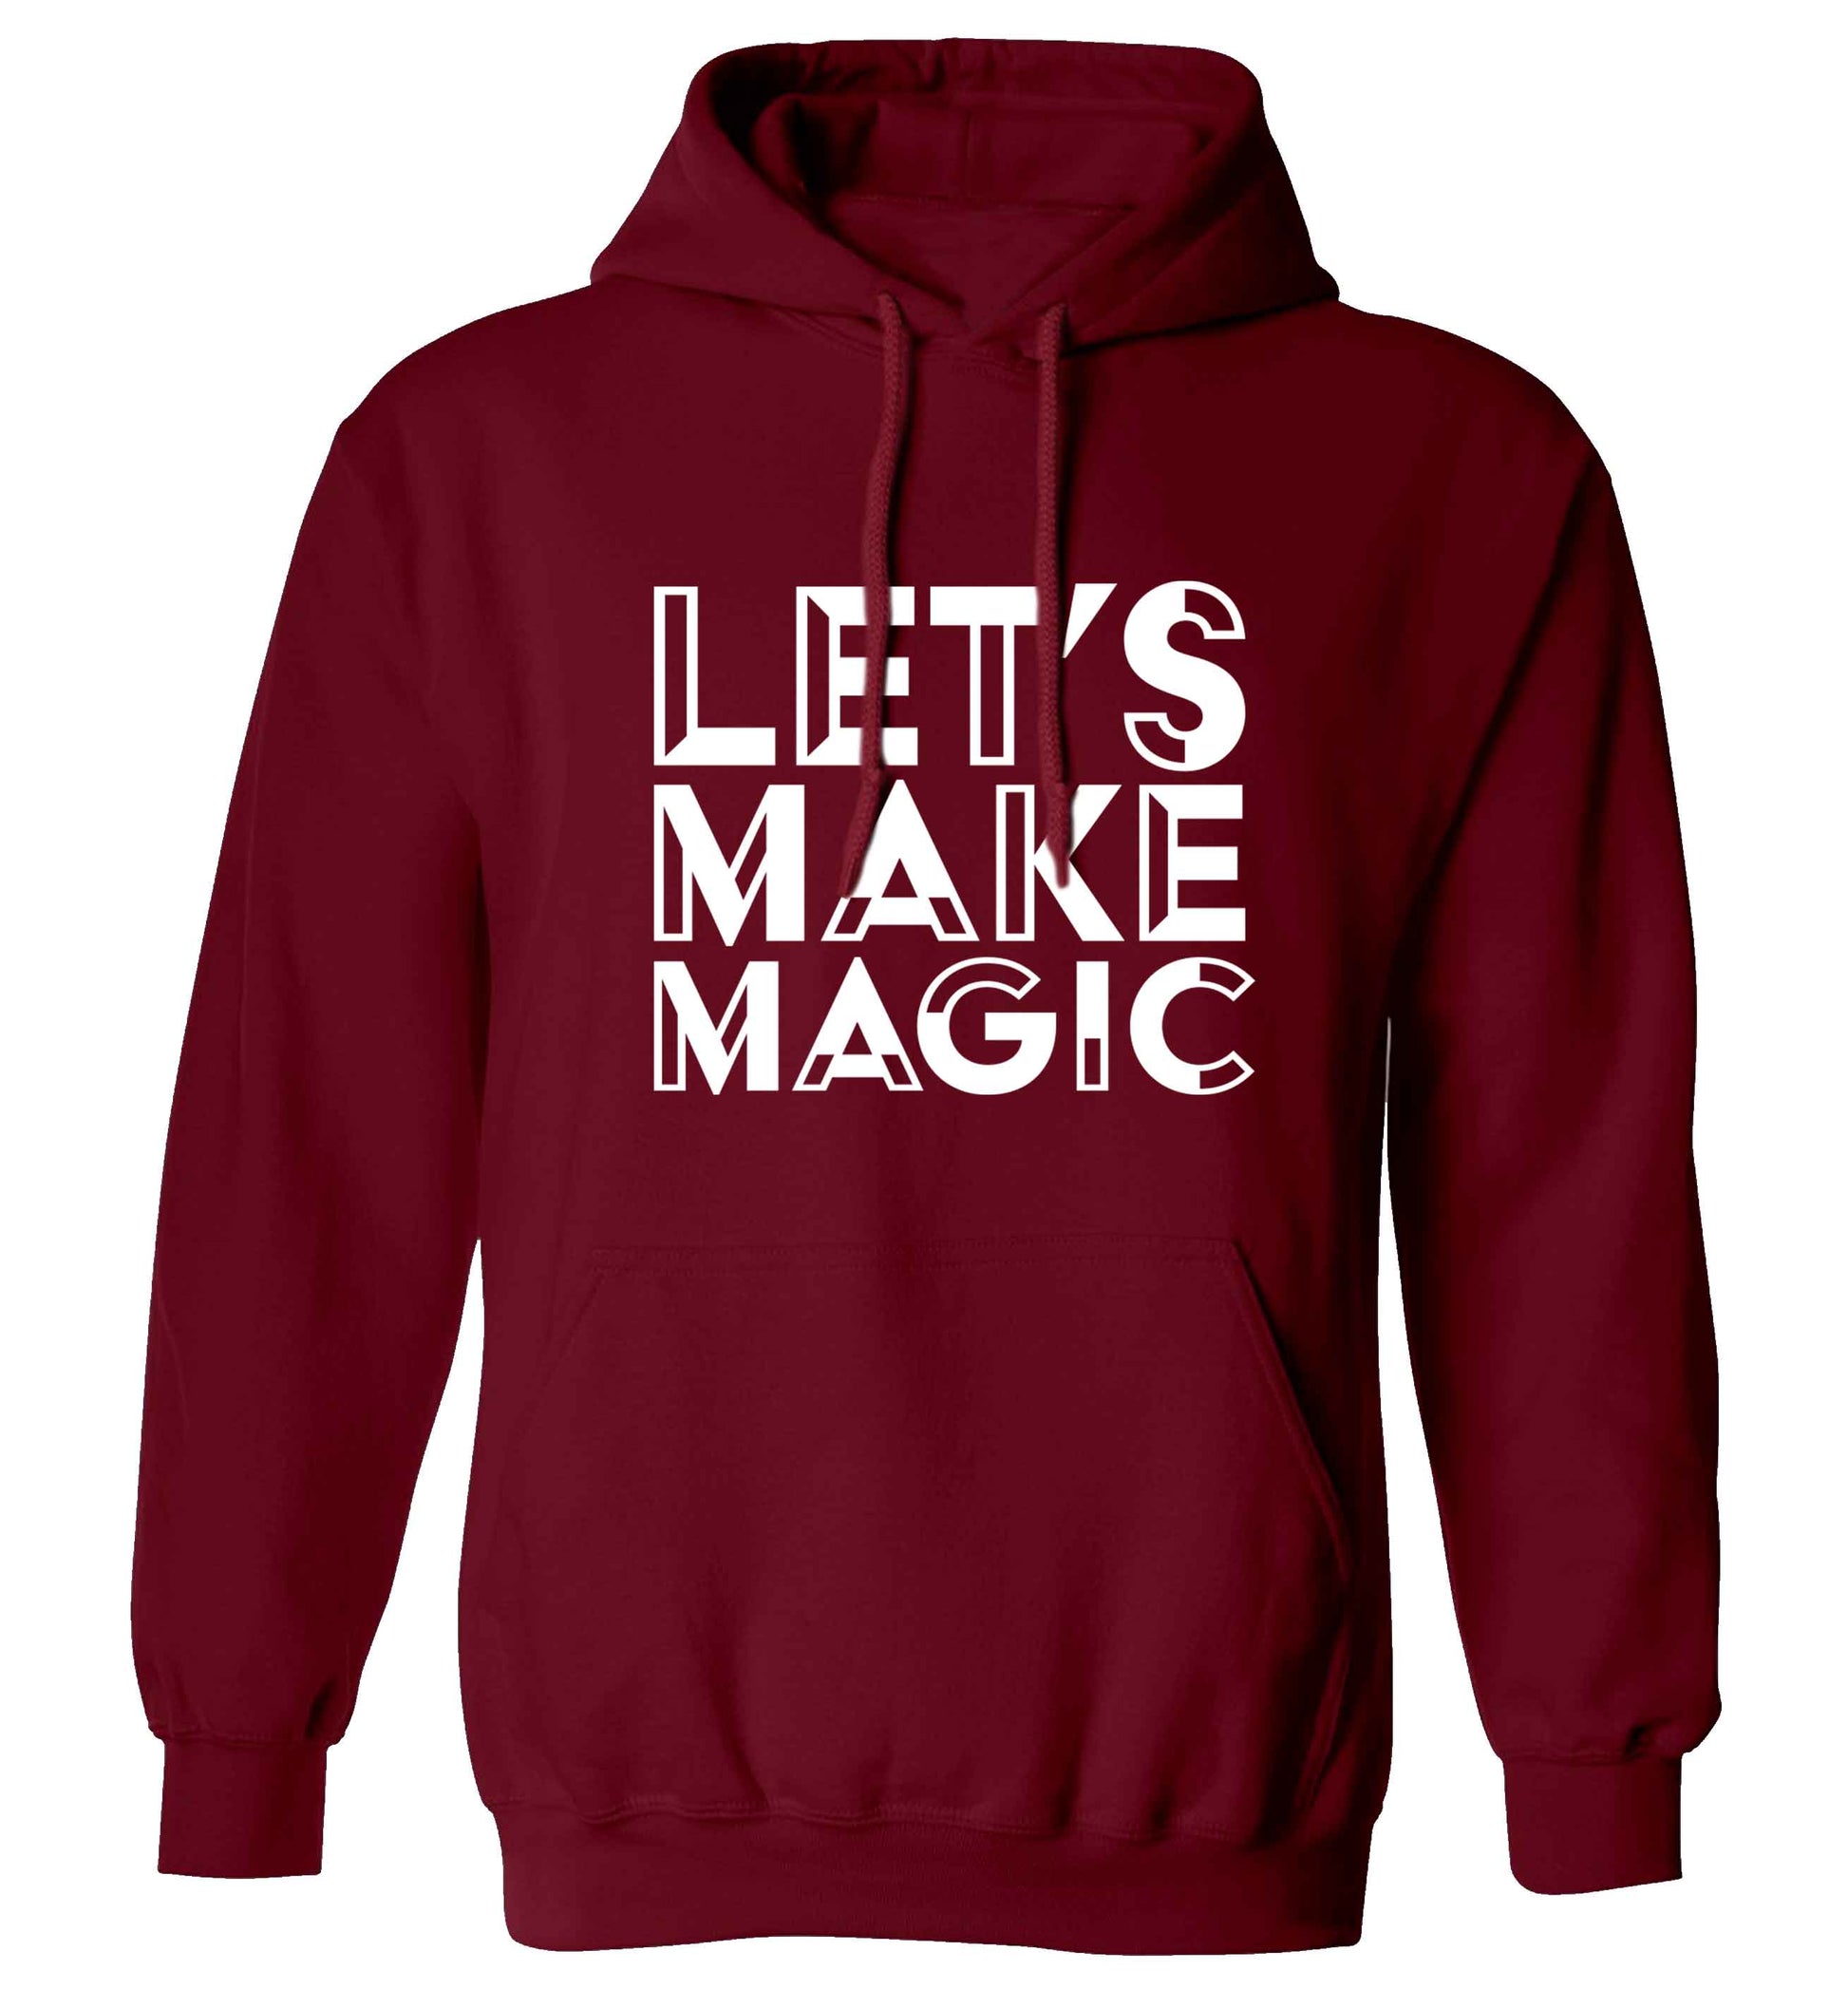 Let's make magic adults unisex maroon hoodie 2XL